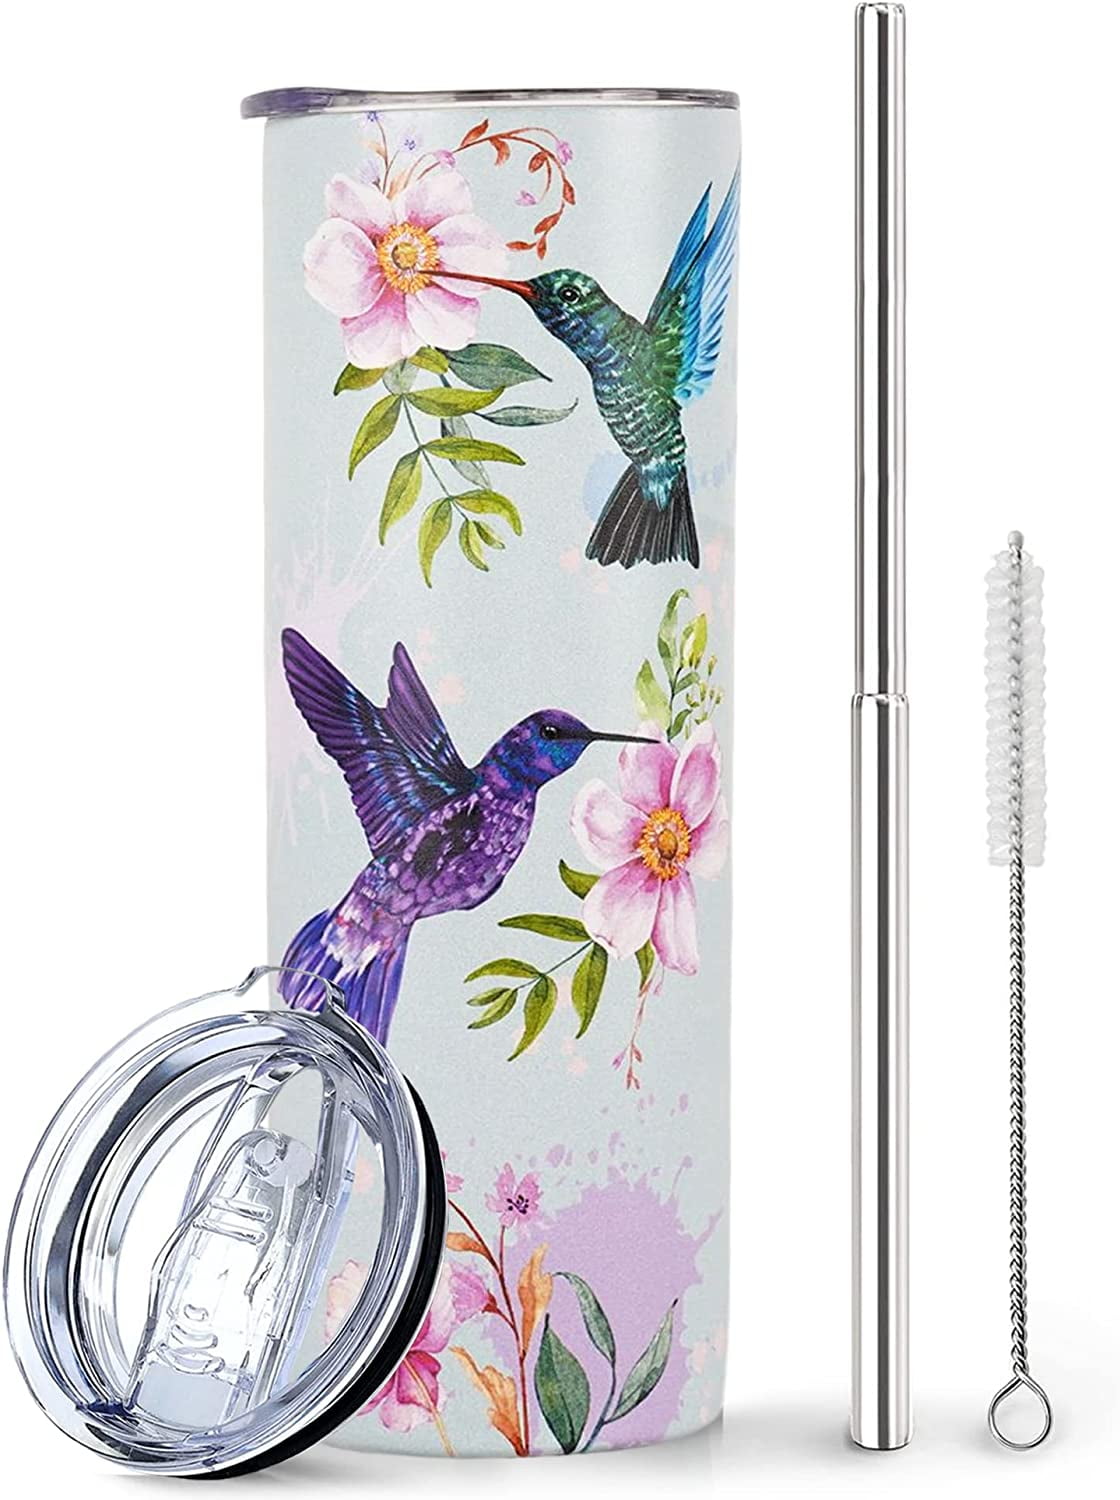 Wassmin Personalized Hummingbird Mug Cup Hummingbird Gifts For